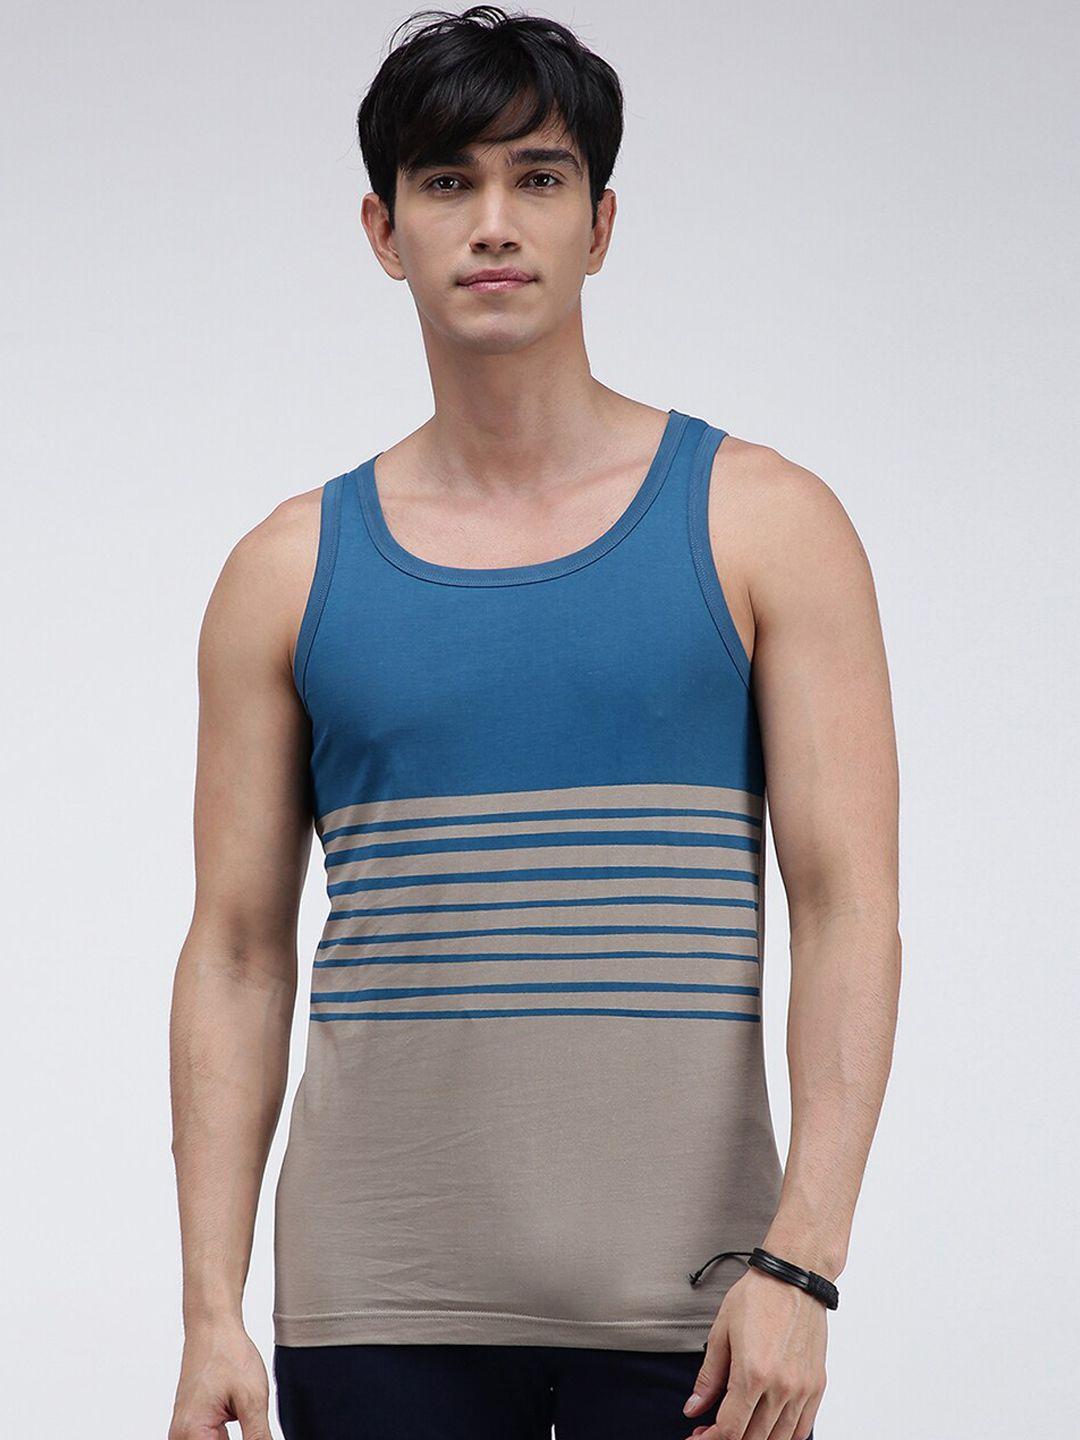 zoiro striped pure cotton bio-polished innerwear basic vest